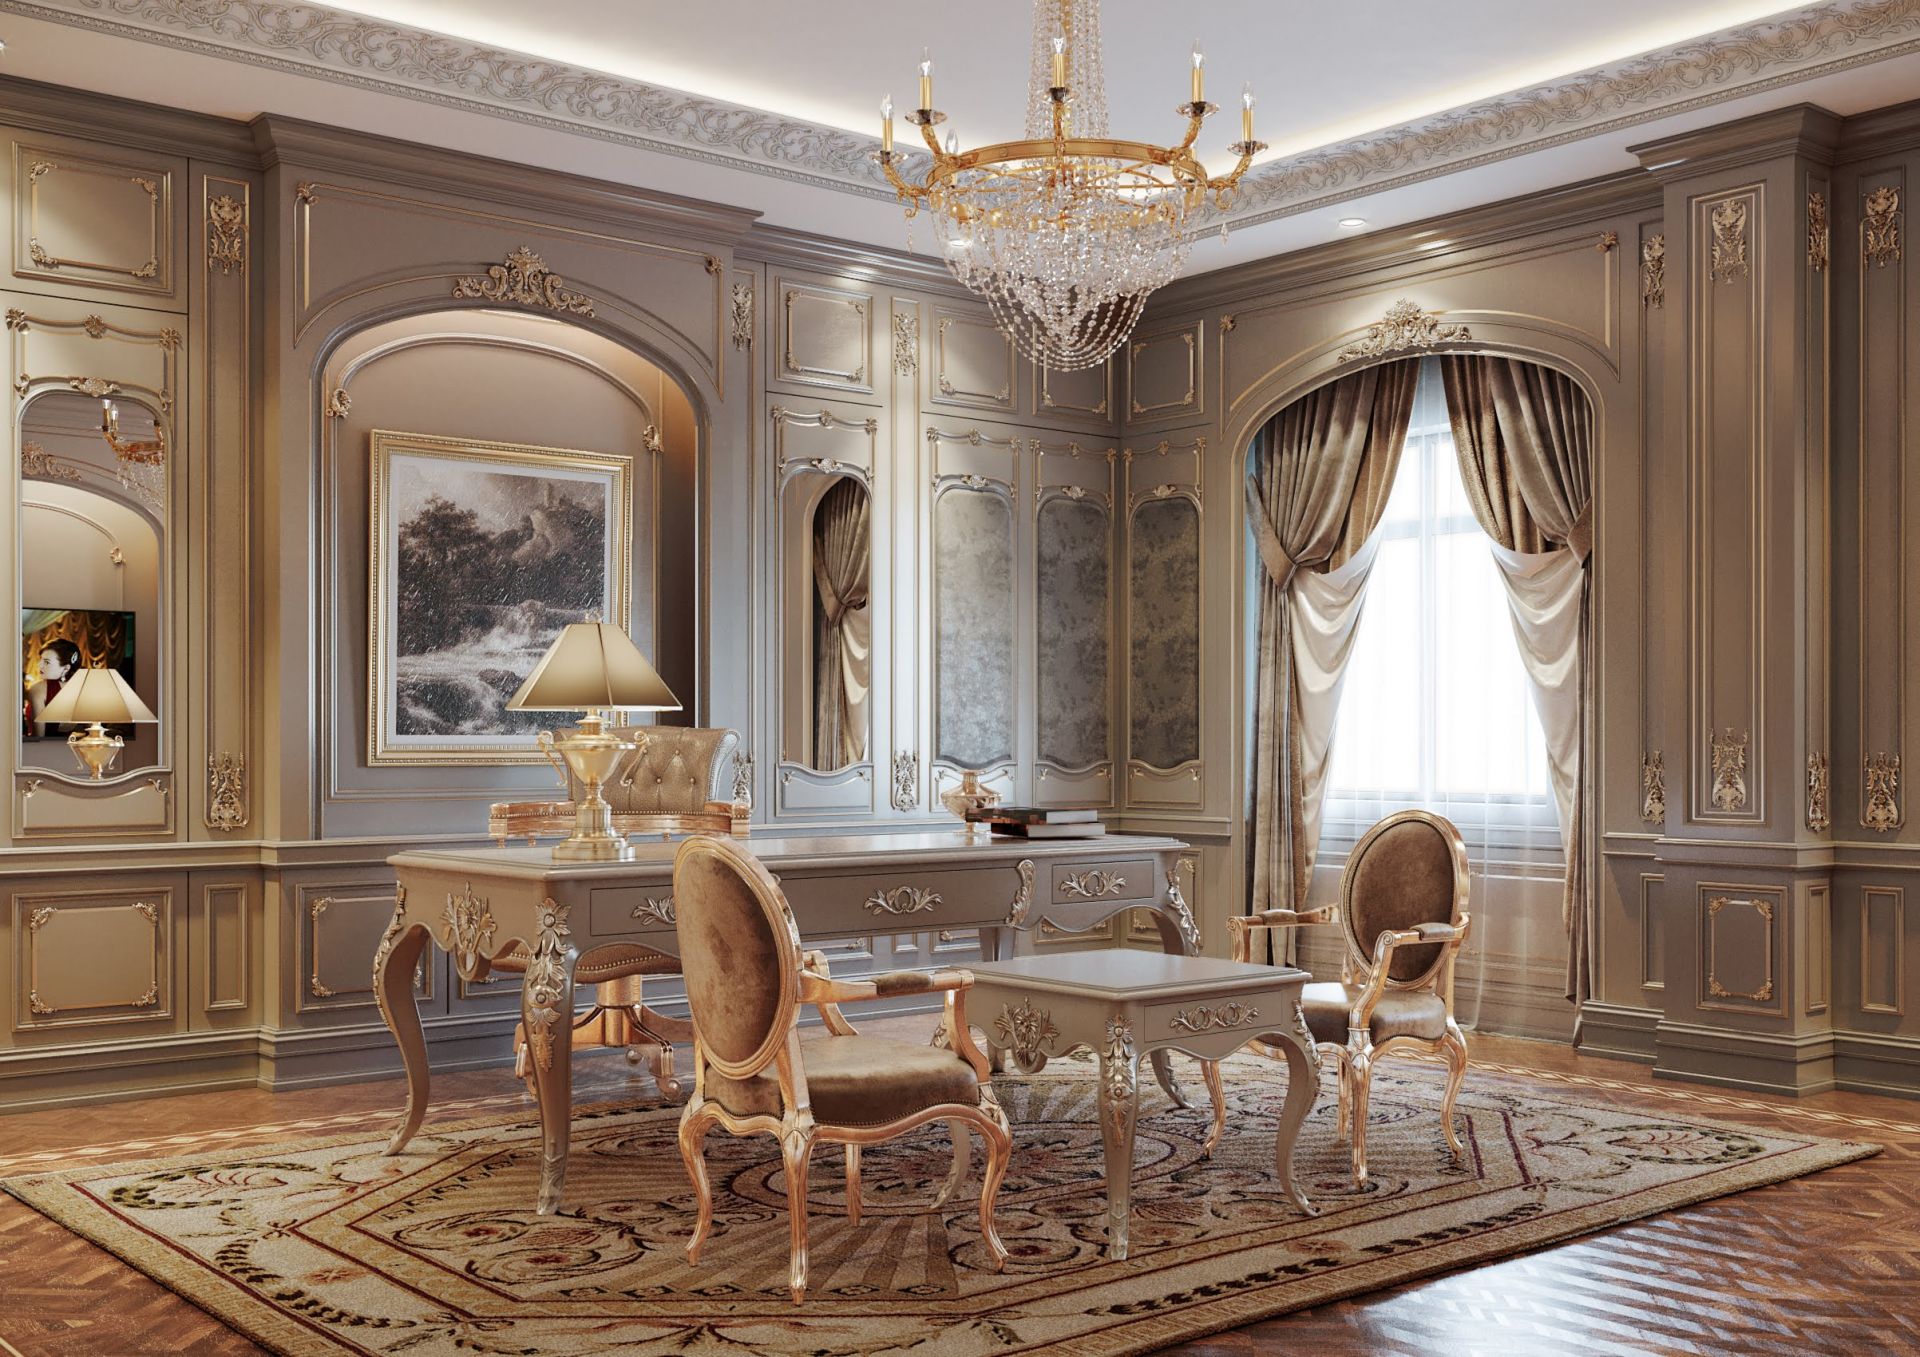 Luxurious study interior